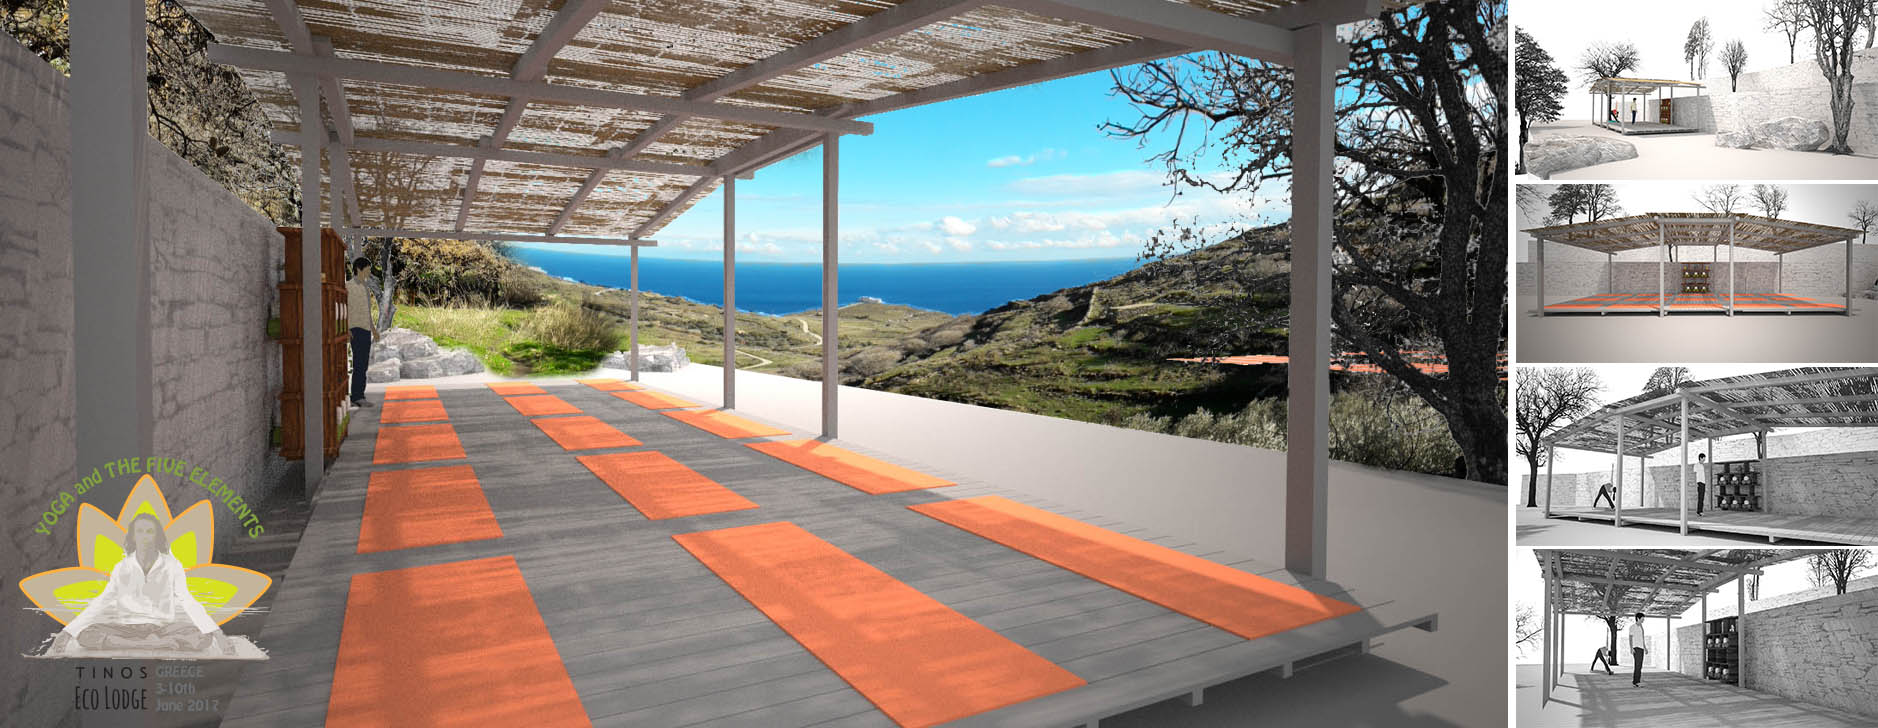 Yoga deck construction DIY – Tinos Eco Lodge